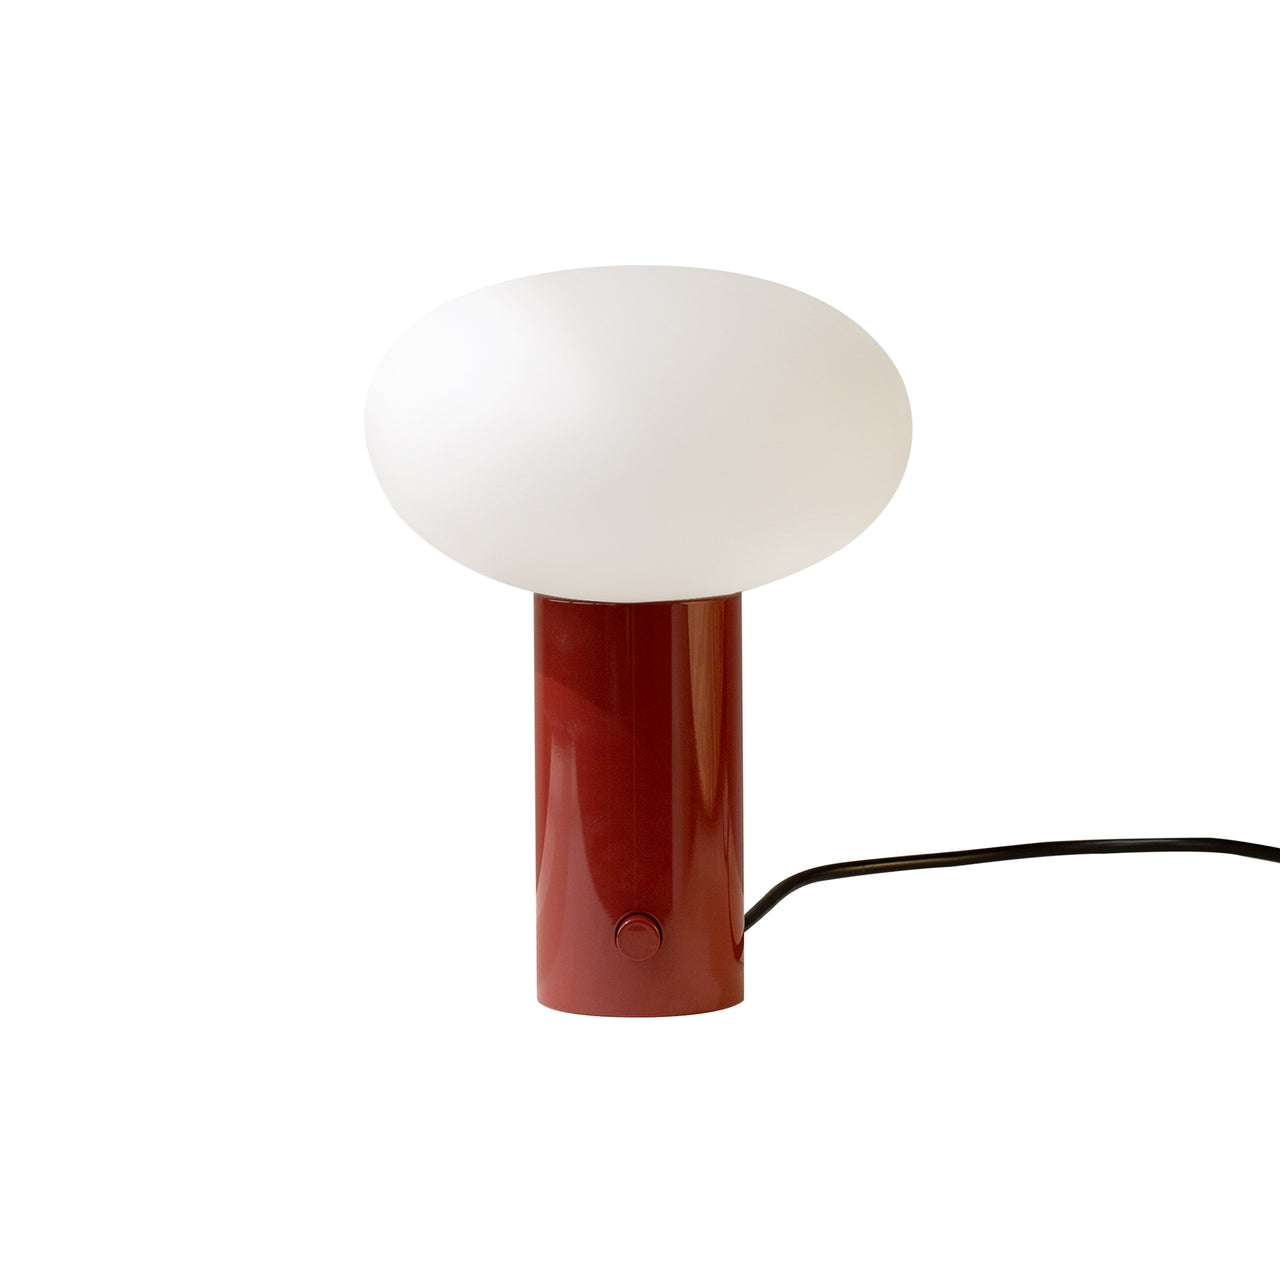 Mushroom Table Lamp: Oxide Red